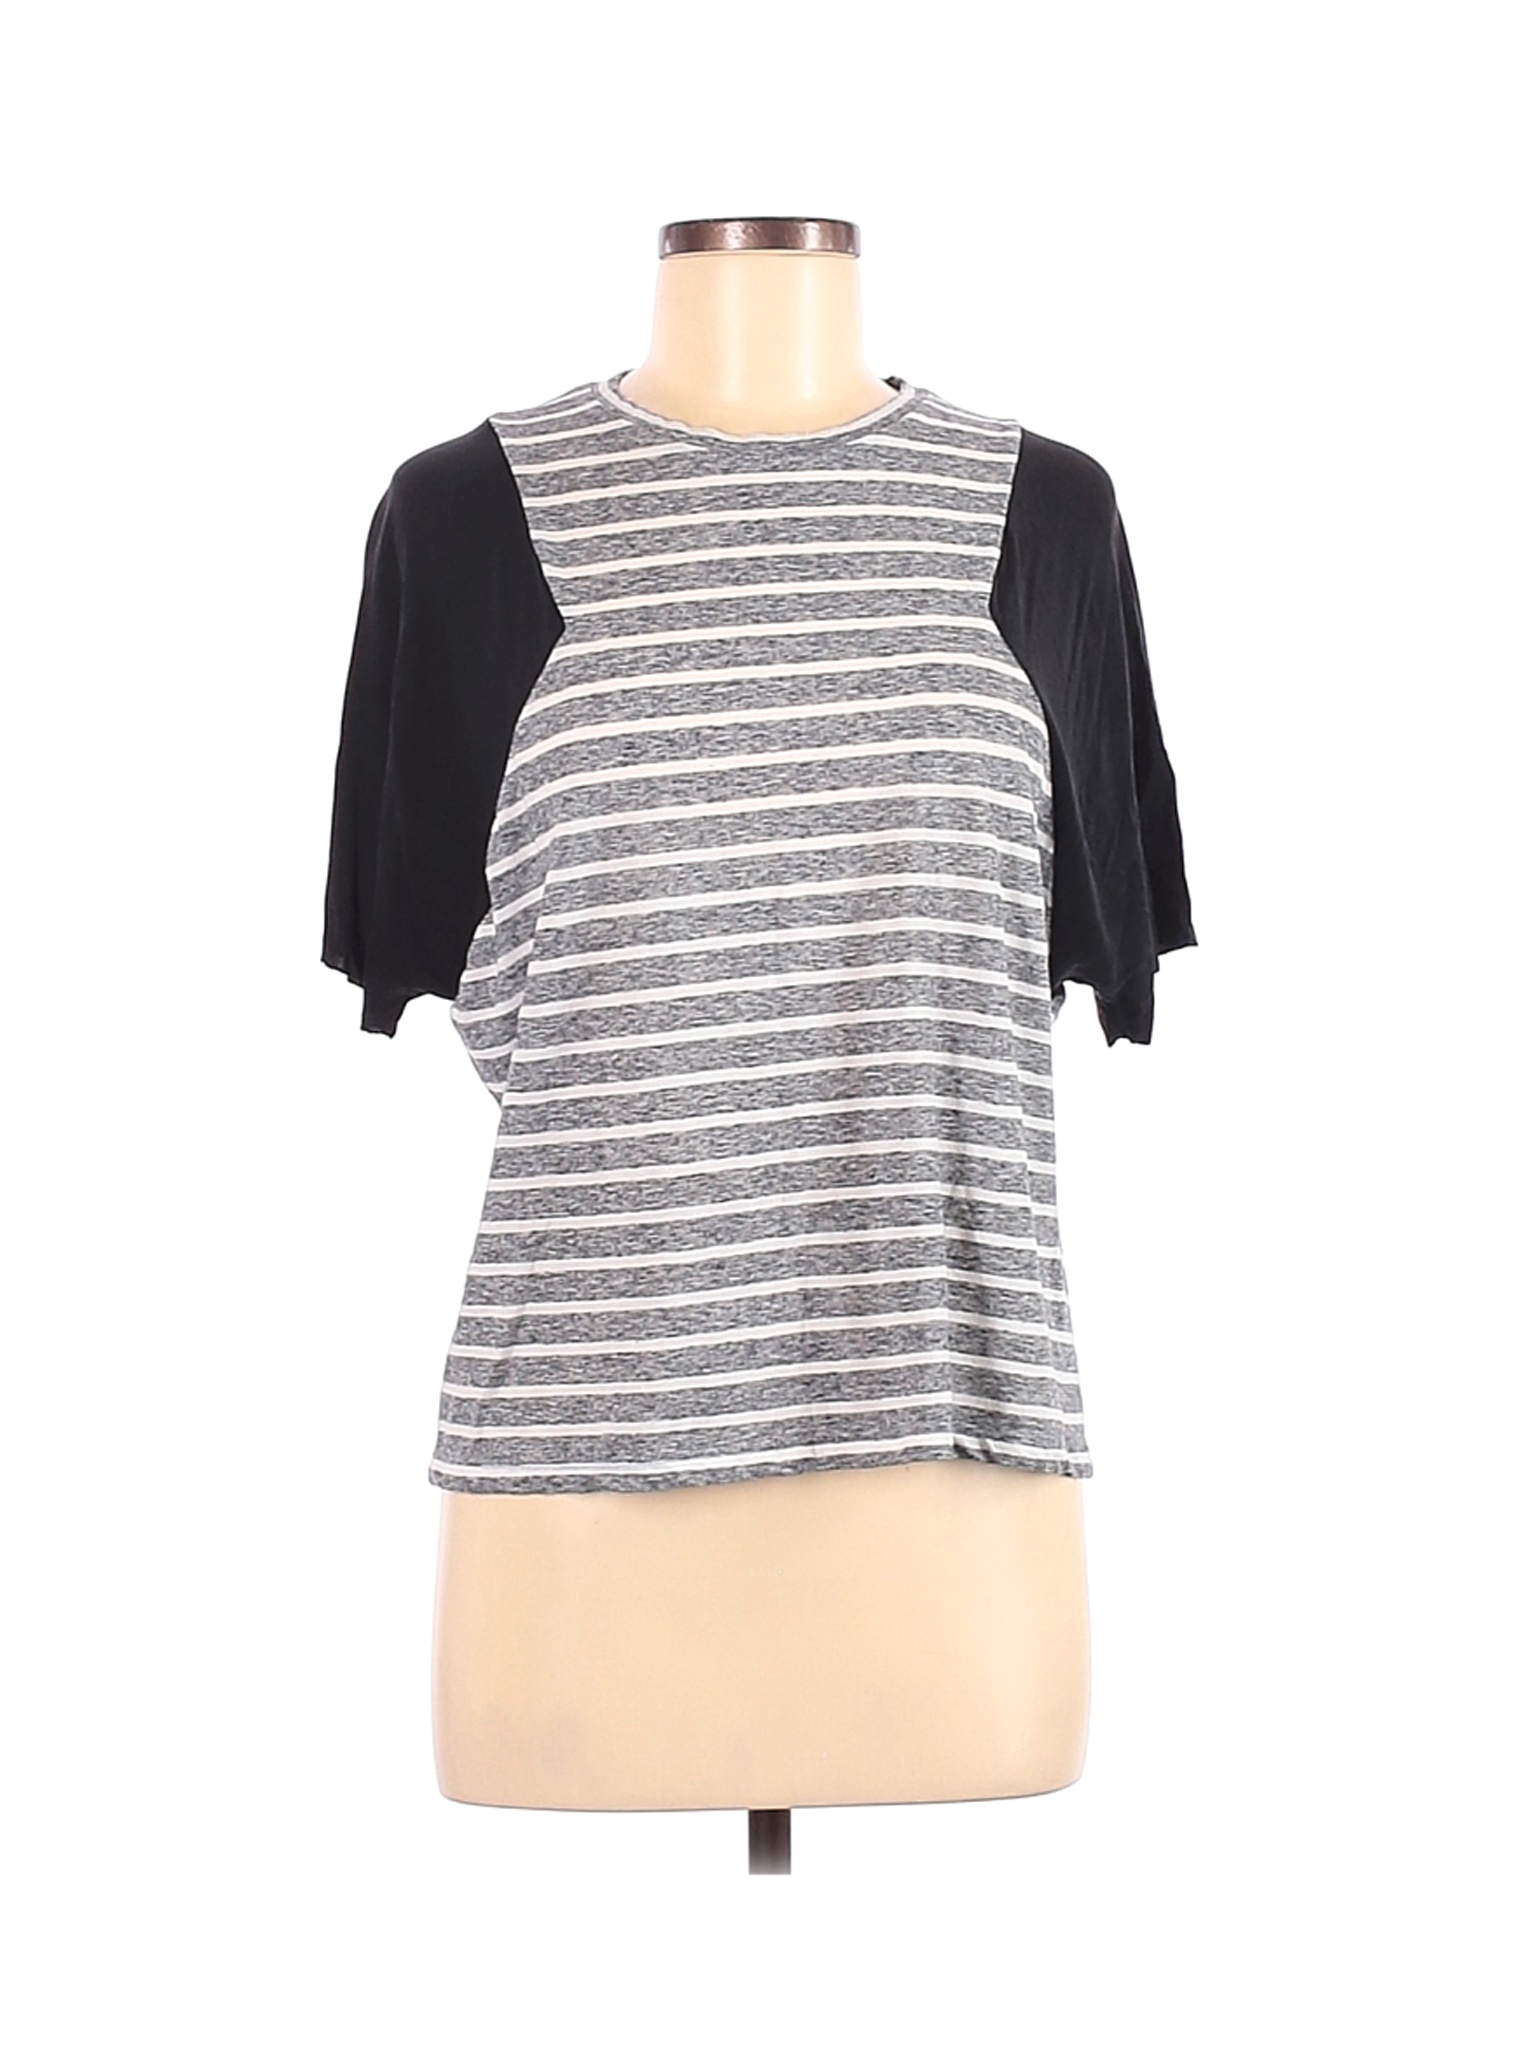 Zara Women Gray Short Sleeve Top M | eBay